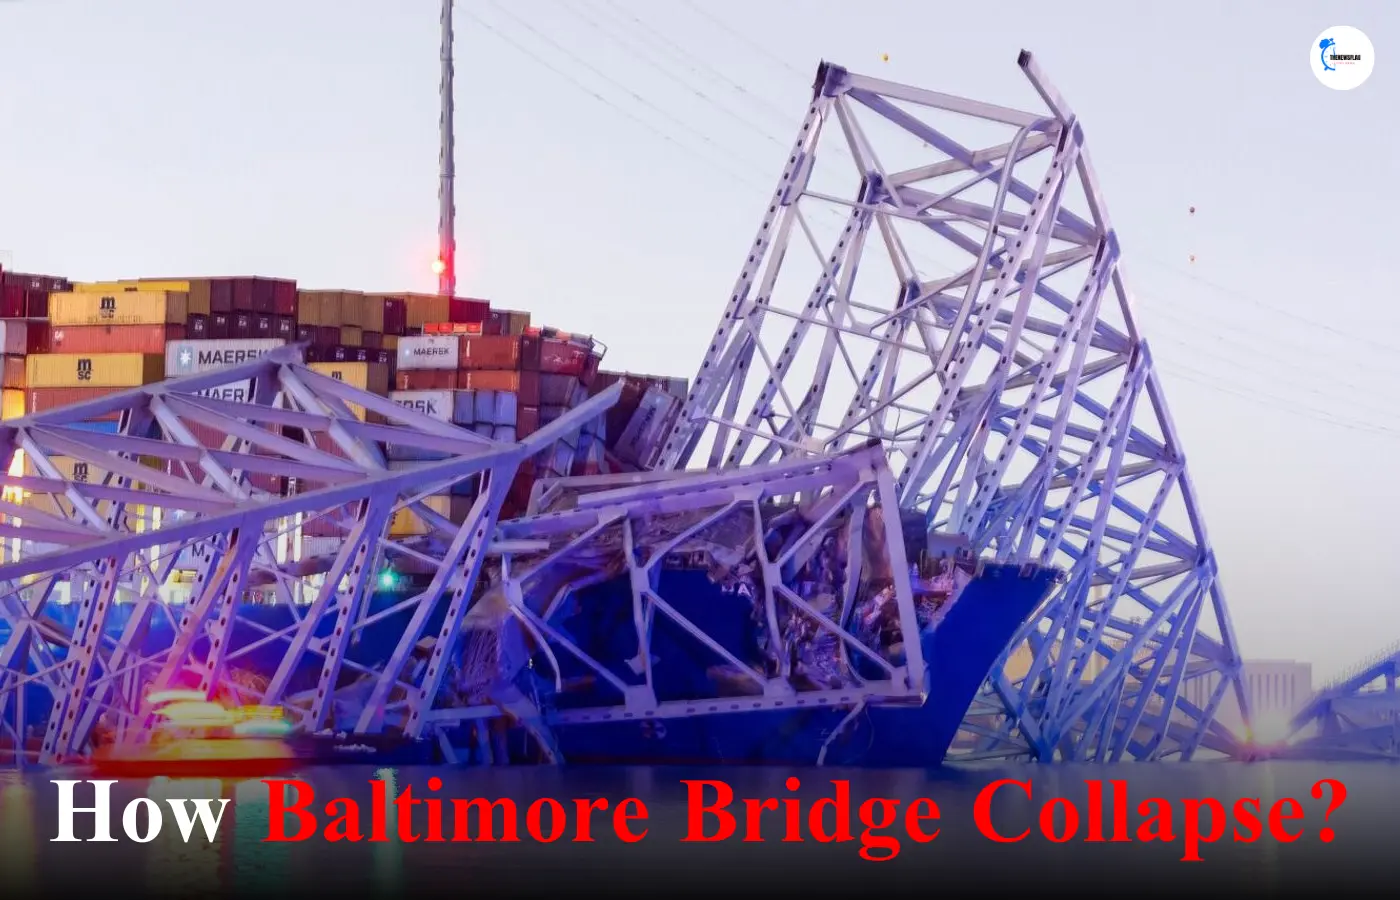 How Did Baltimore Bridge Collapse?